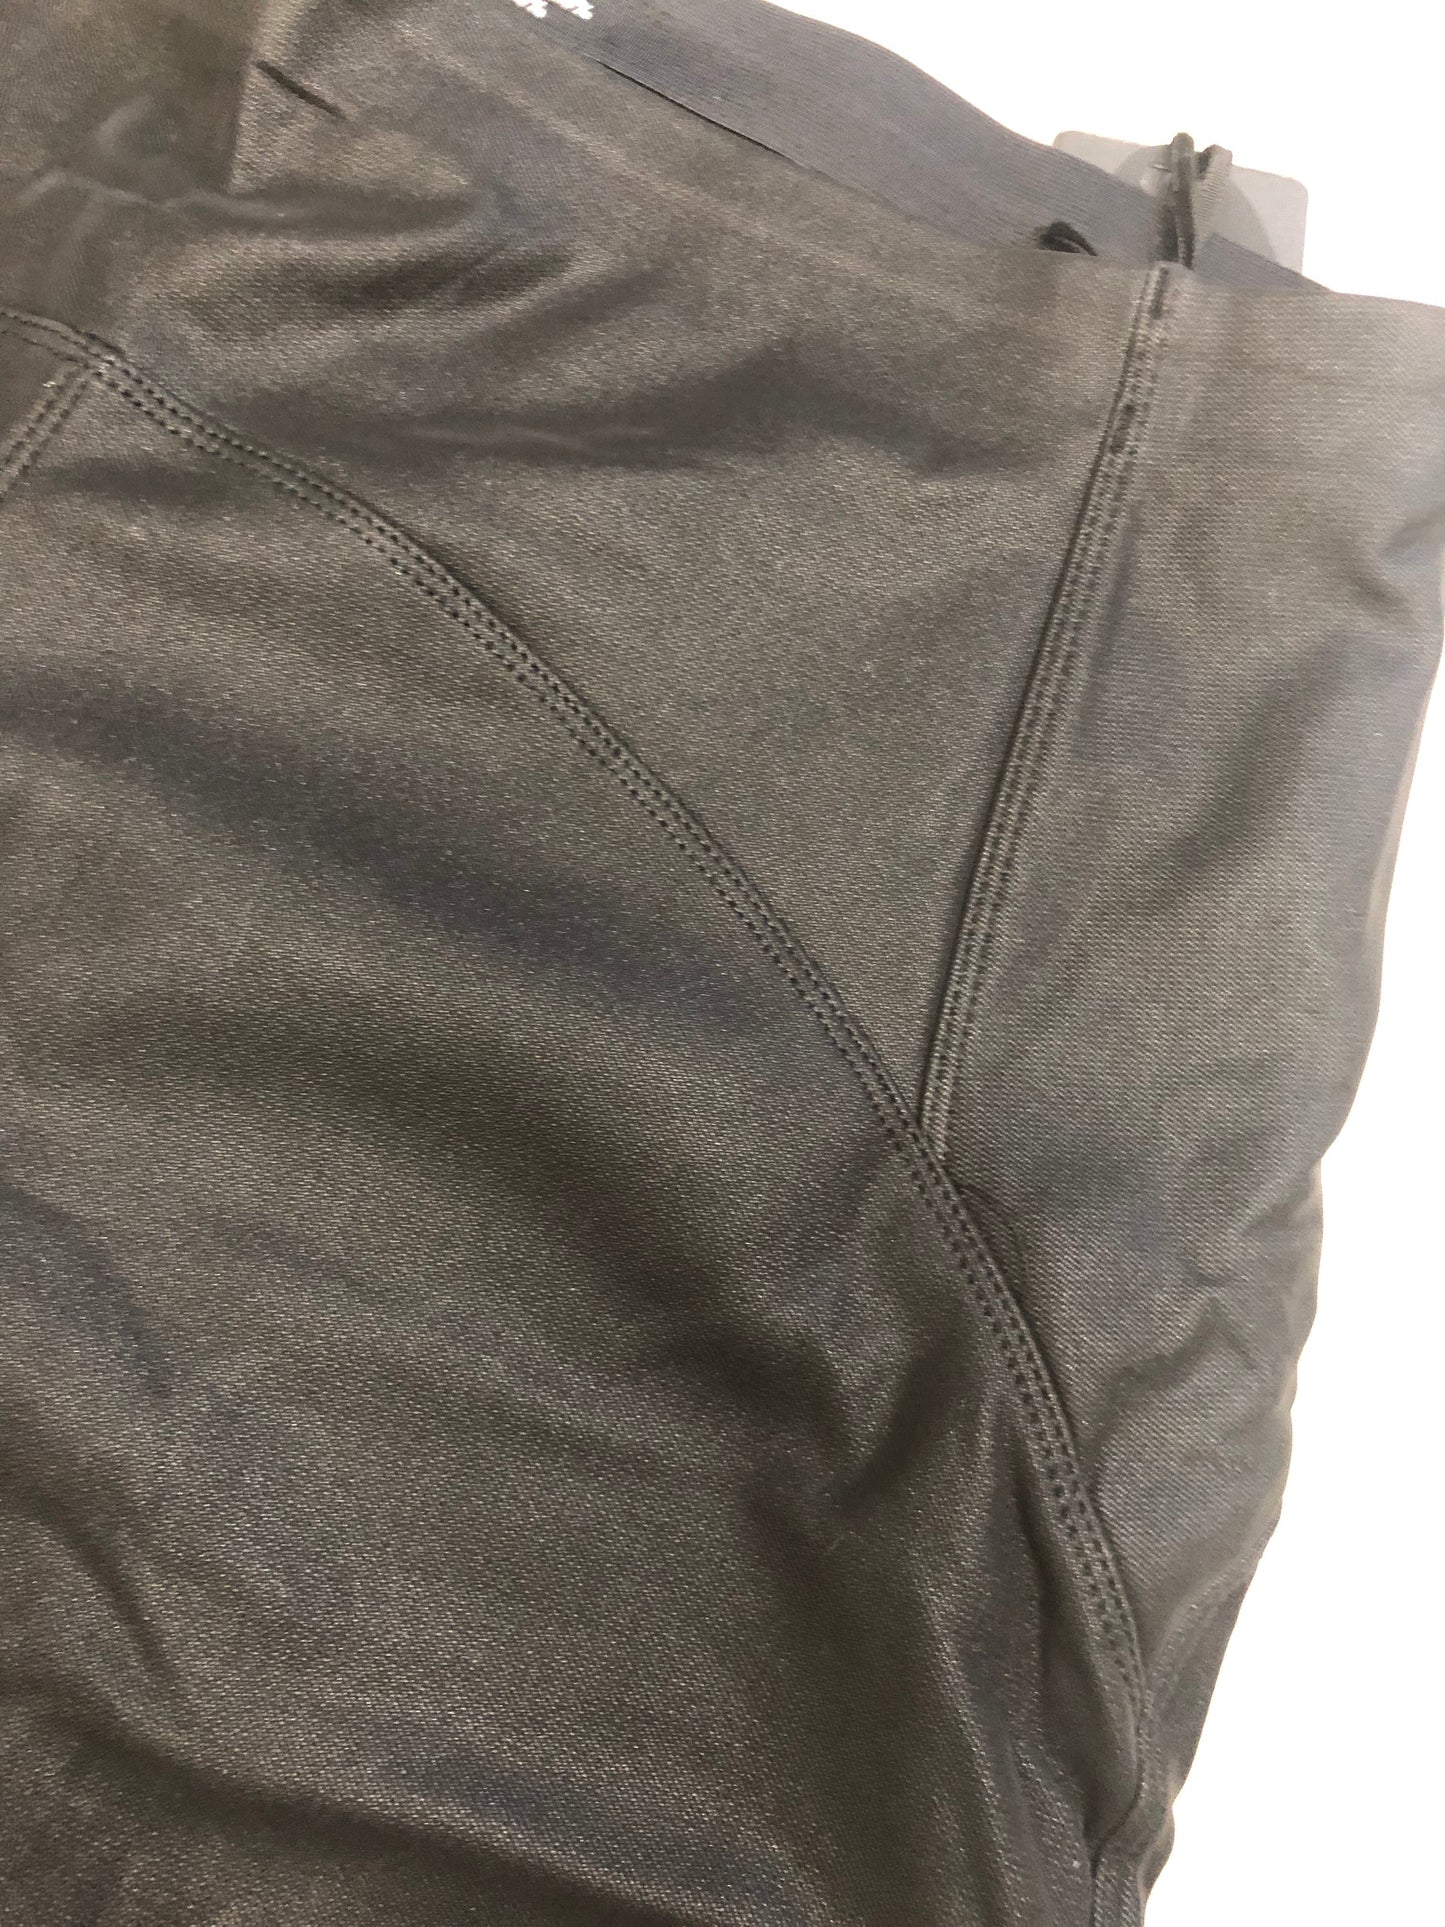 Black matte faux leather jeggings sizes 12-20